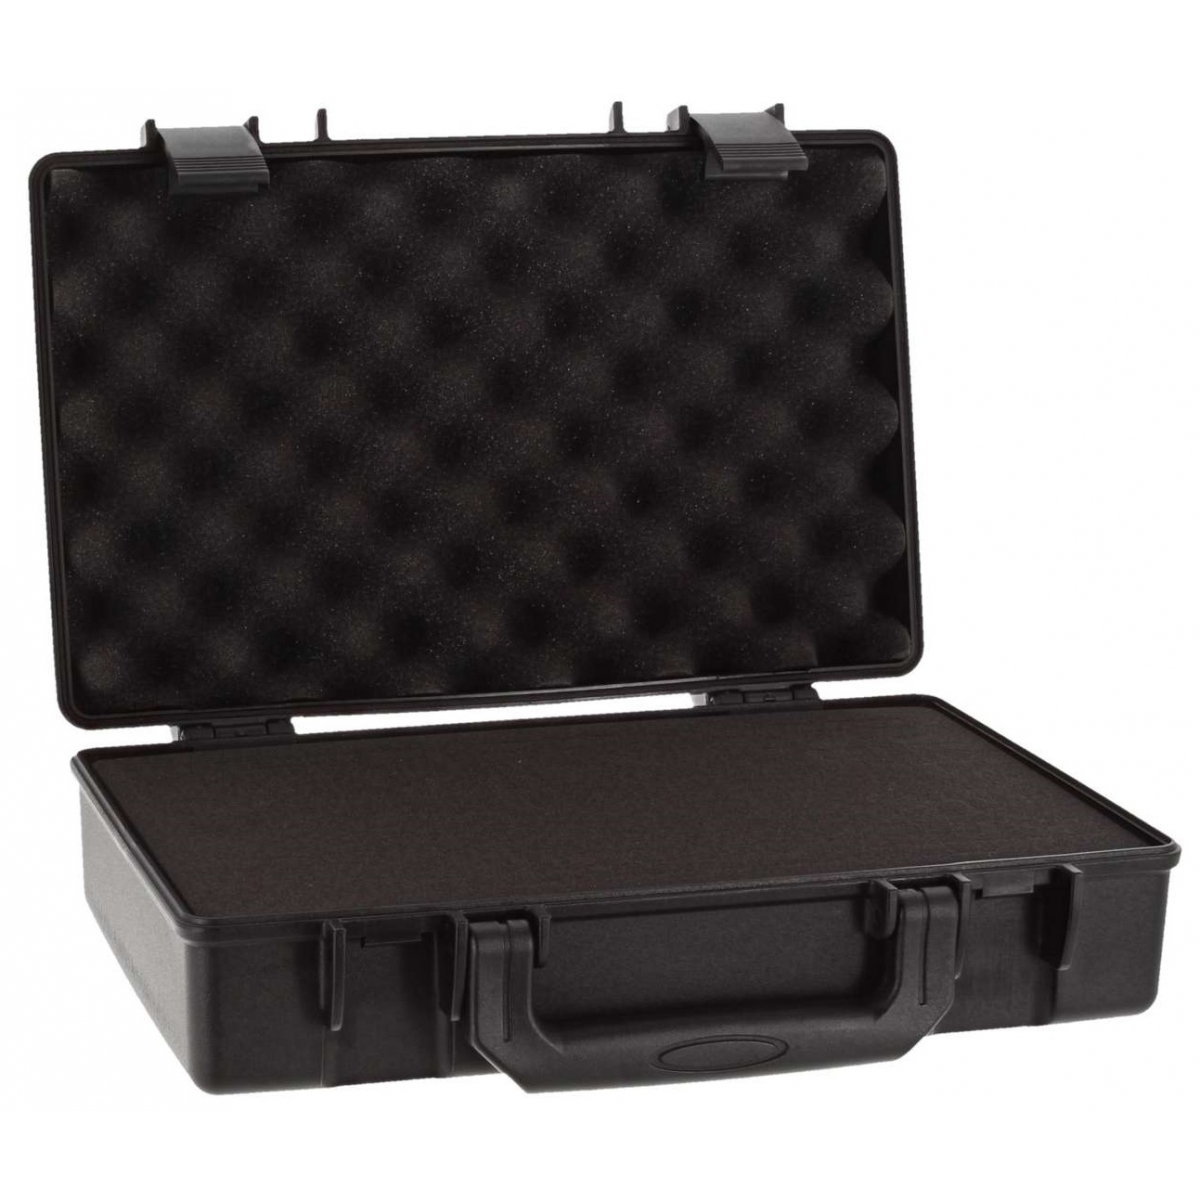 Flight cases utilitaires - Power Acoustics - Flight cases - IP65 CASE 10